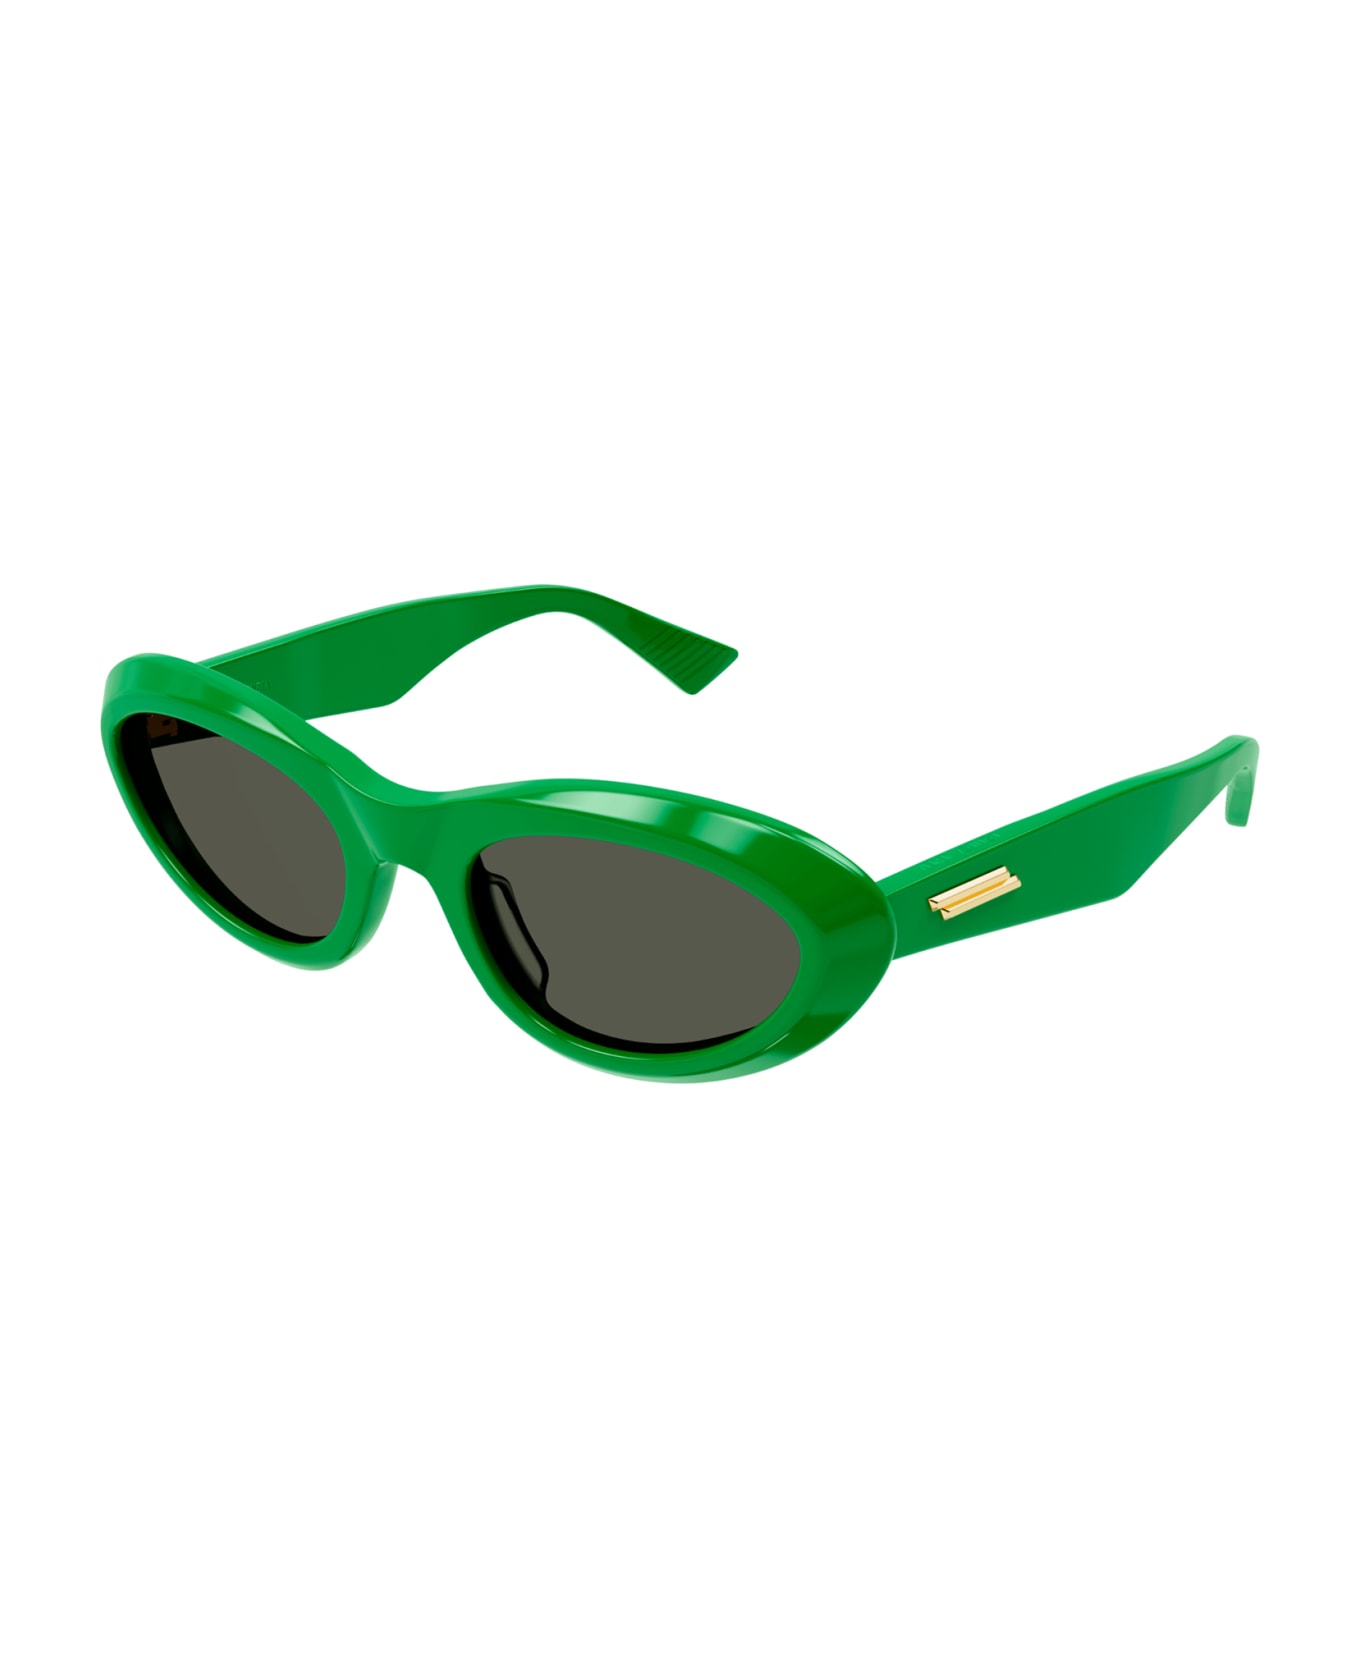 Bottega Veneta Eyewear 1egg4jb0a - 003 green green green